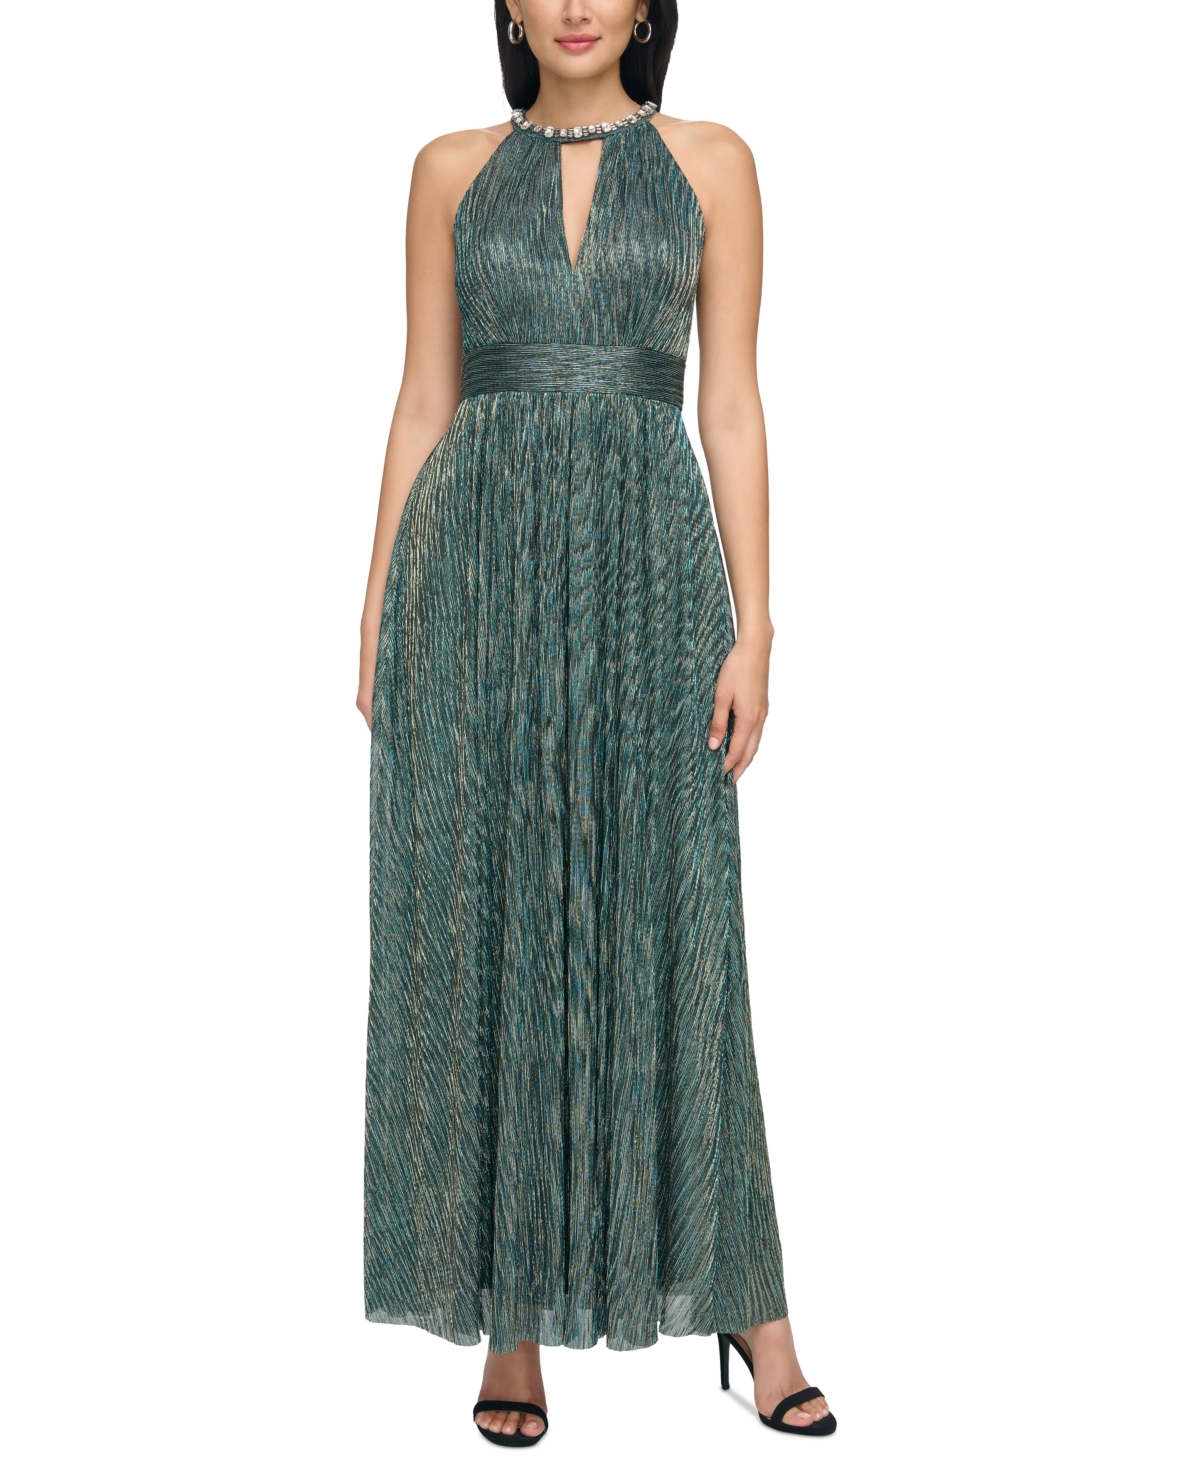 70s Prom, Formal, Evening, Party Dresses Eliza J Womens Metallic Beaded Halter-Neck Gown - Tea $228.00 AT vintagedancer.com